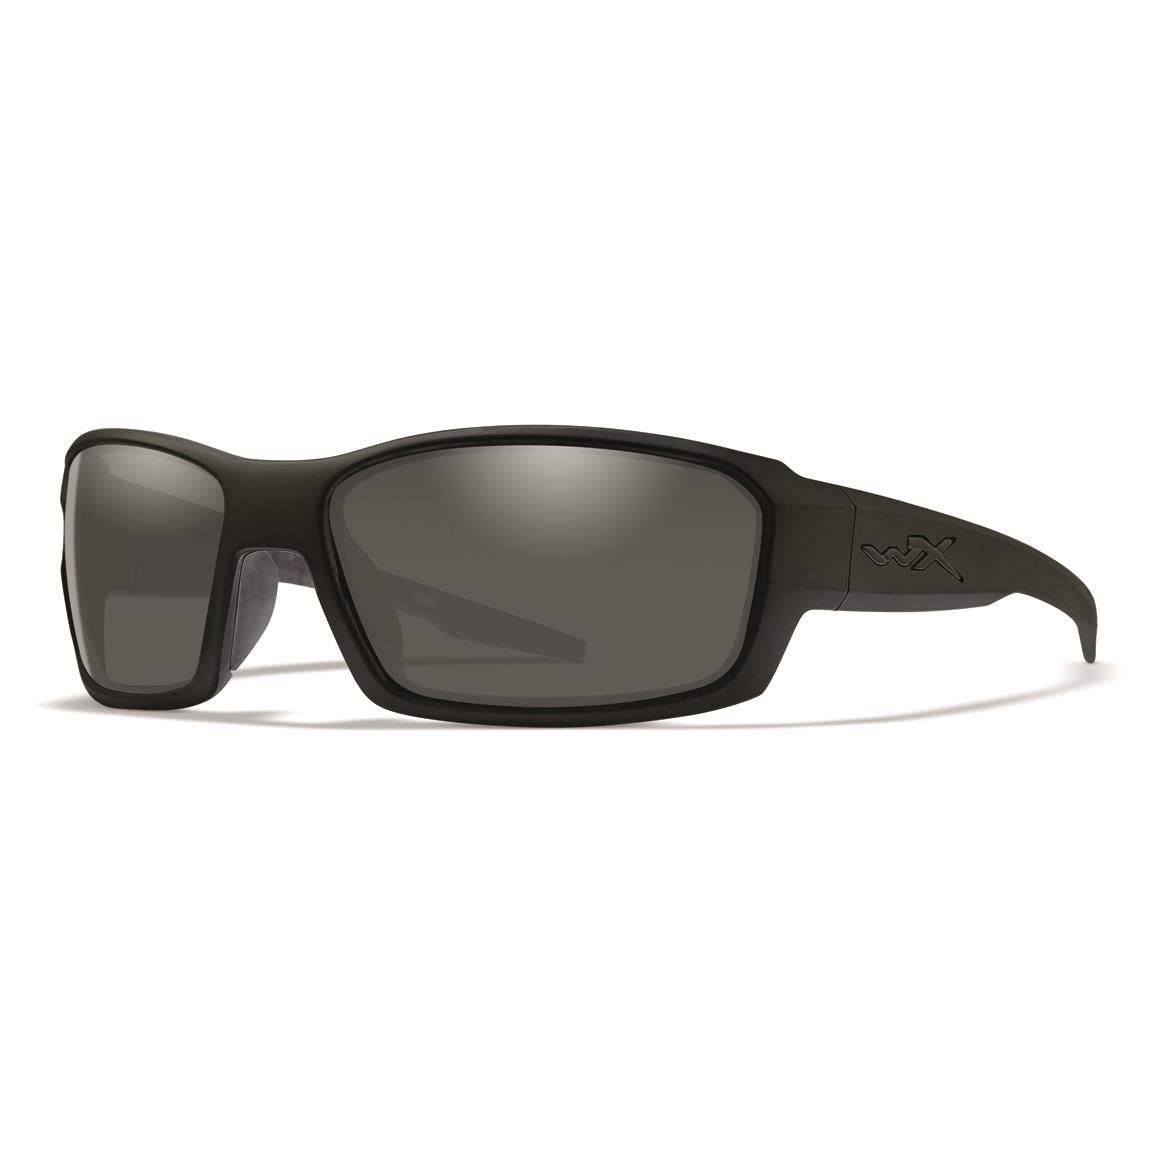 Wiley X WX Rebel Sunglasses/Shooting Glasses, Matte Black